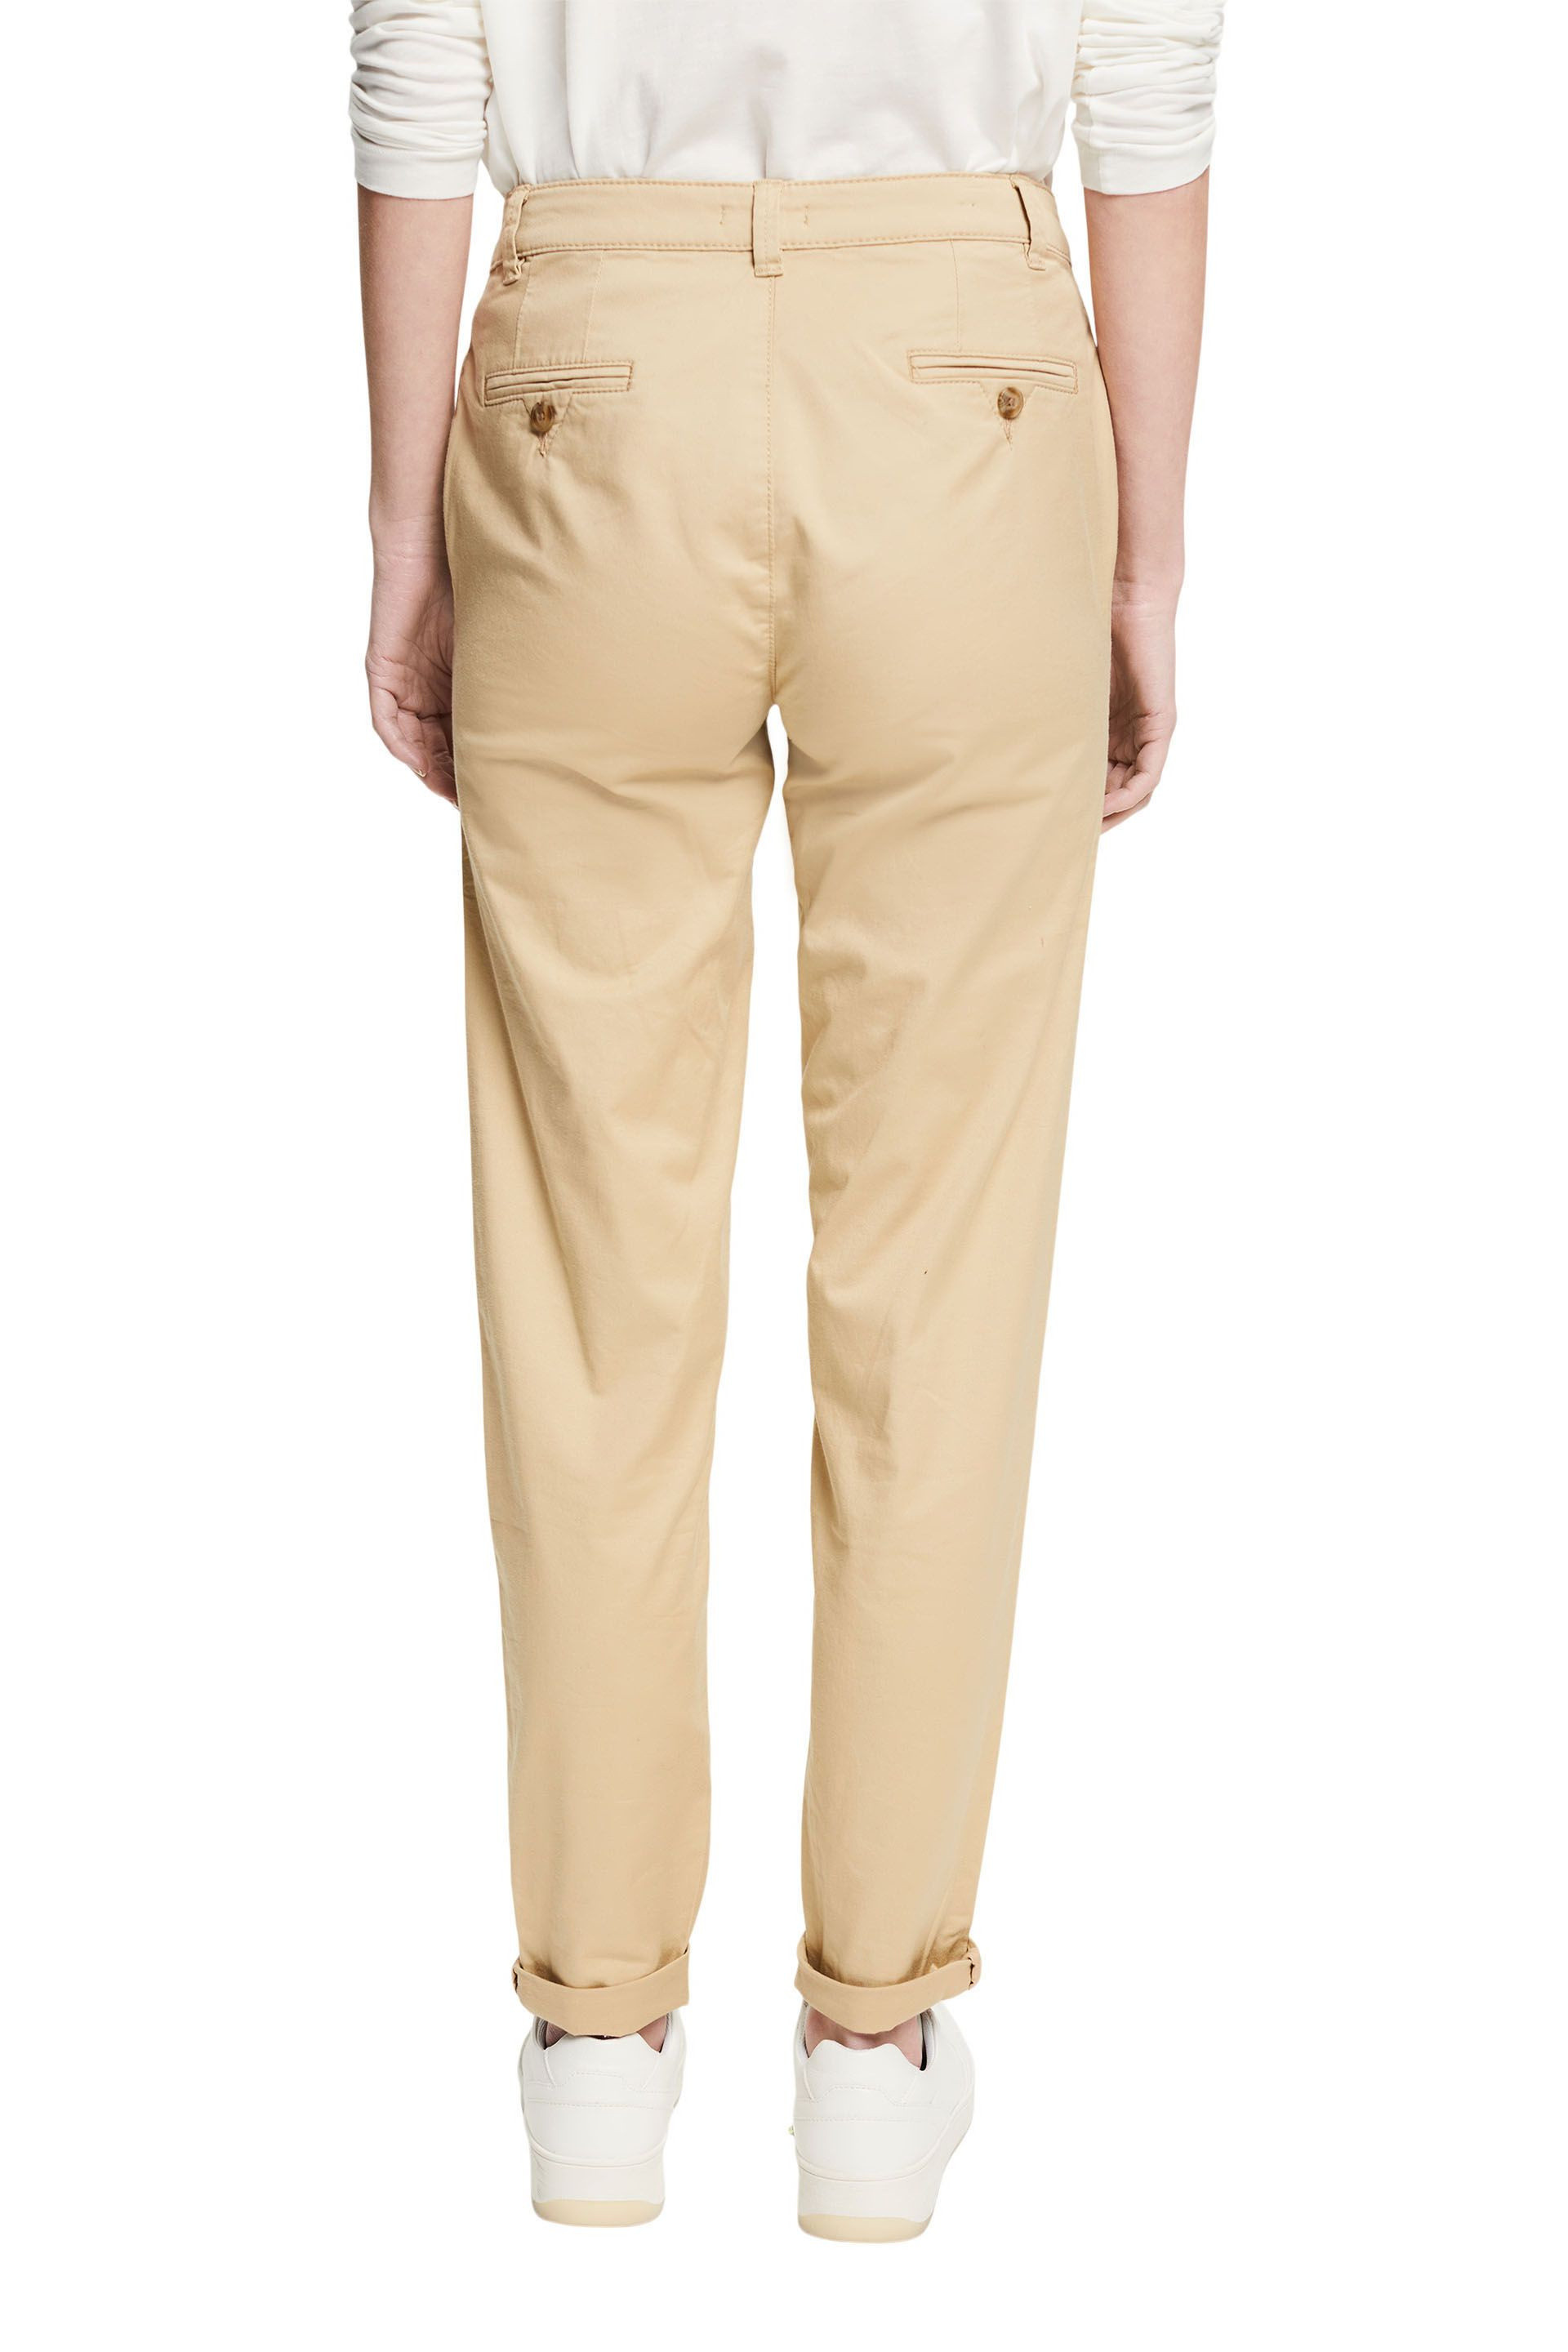 Pantaloni chino stretch, Beige, large image number 2